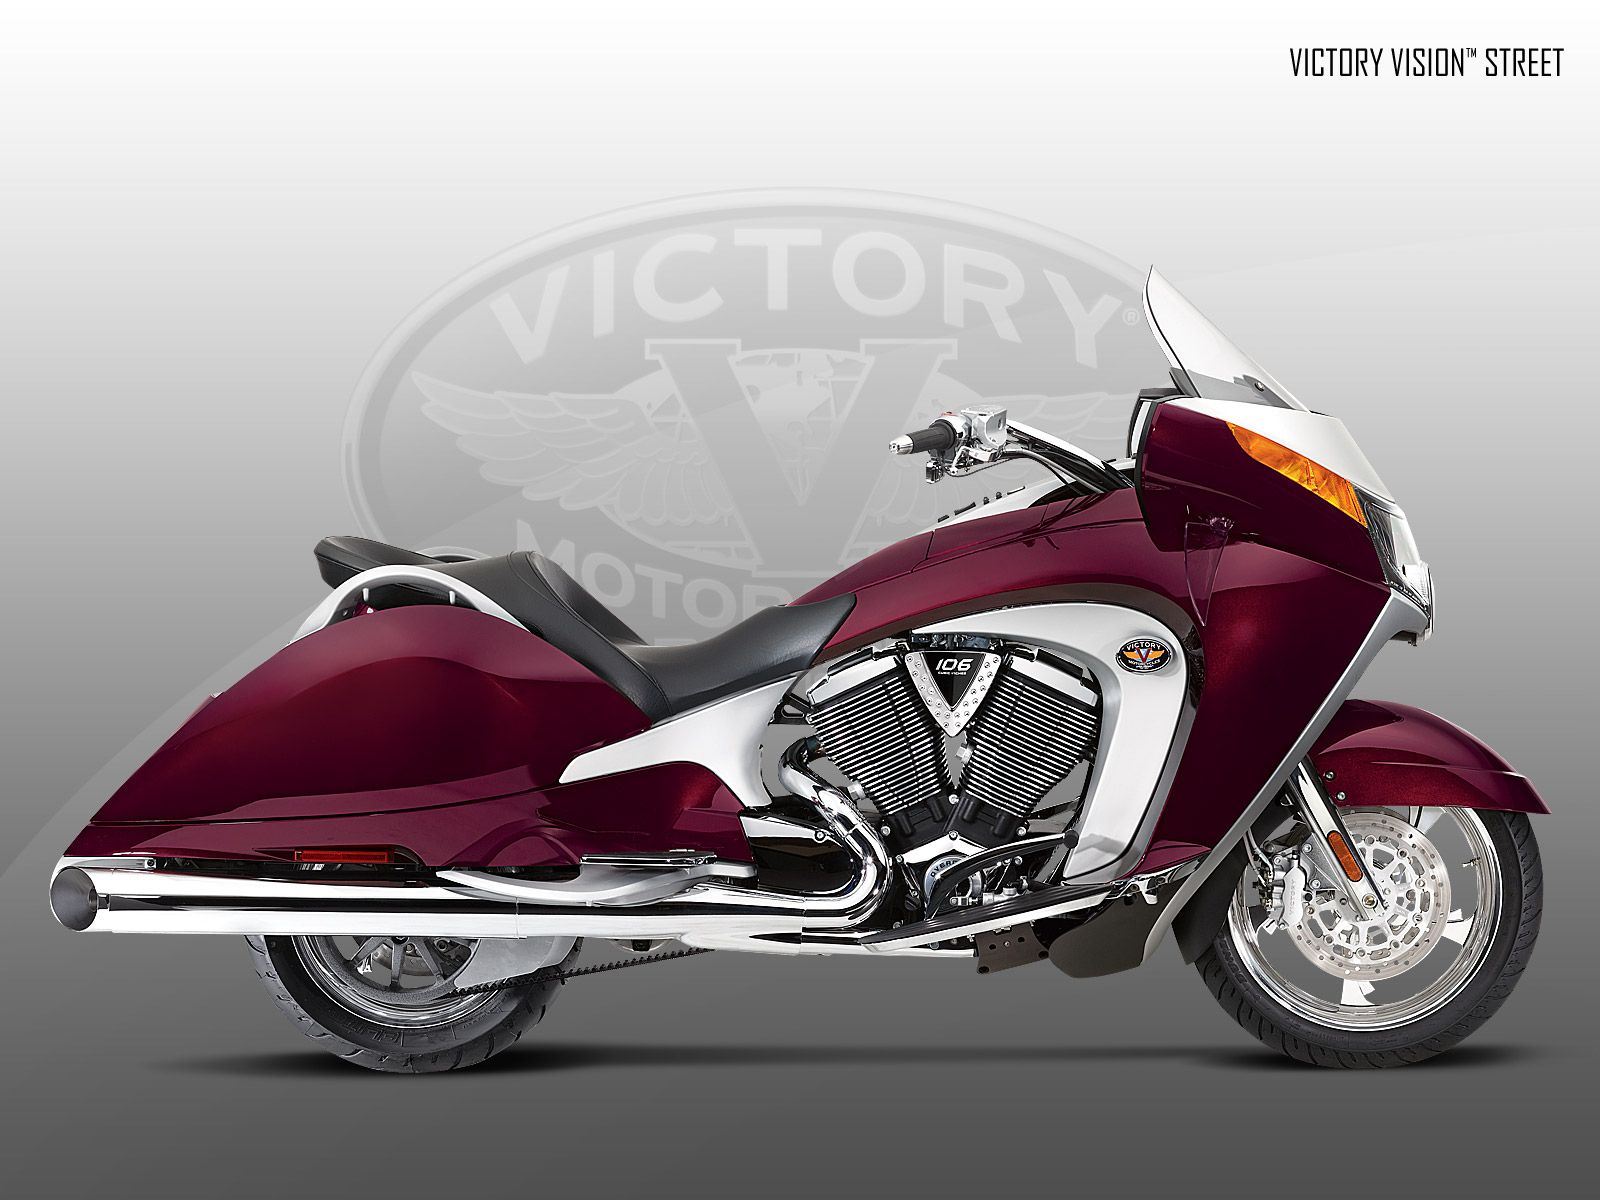  2009 Victory Vision Street Premium